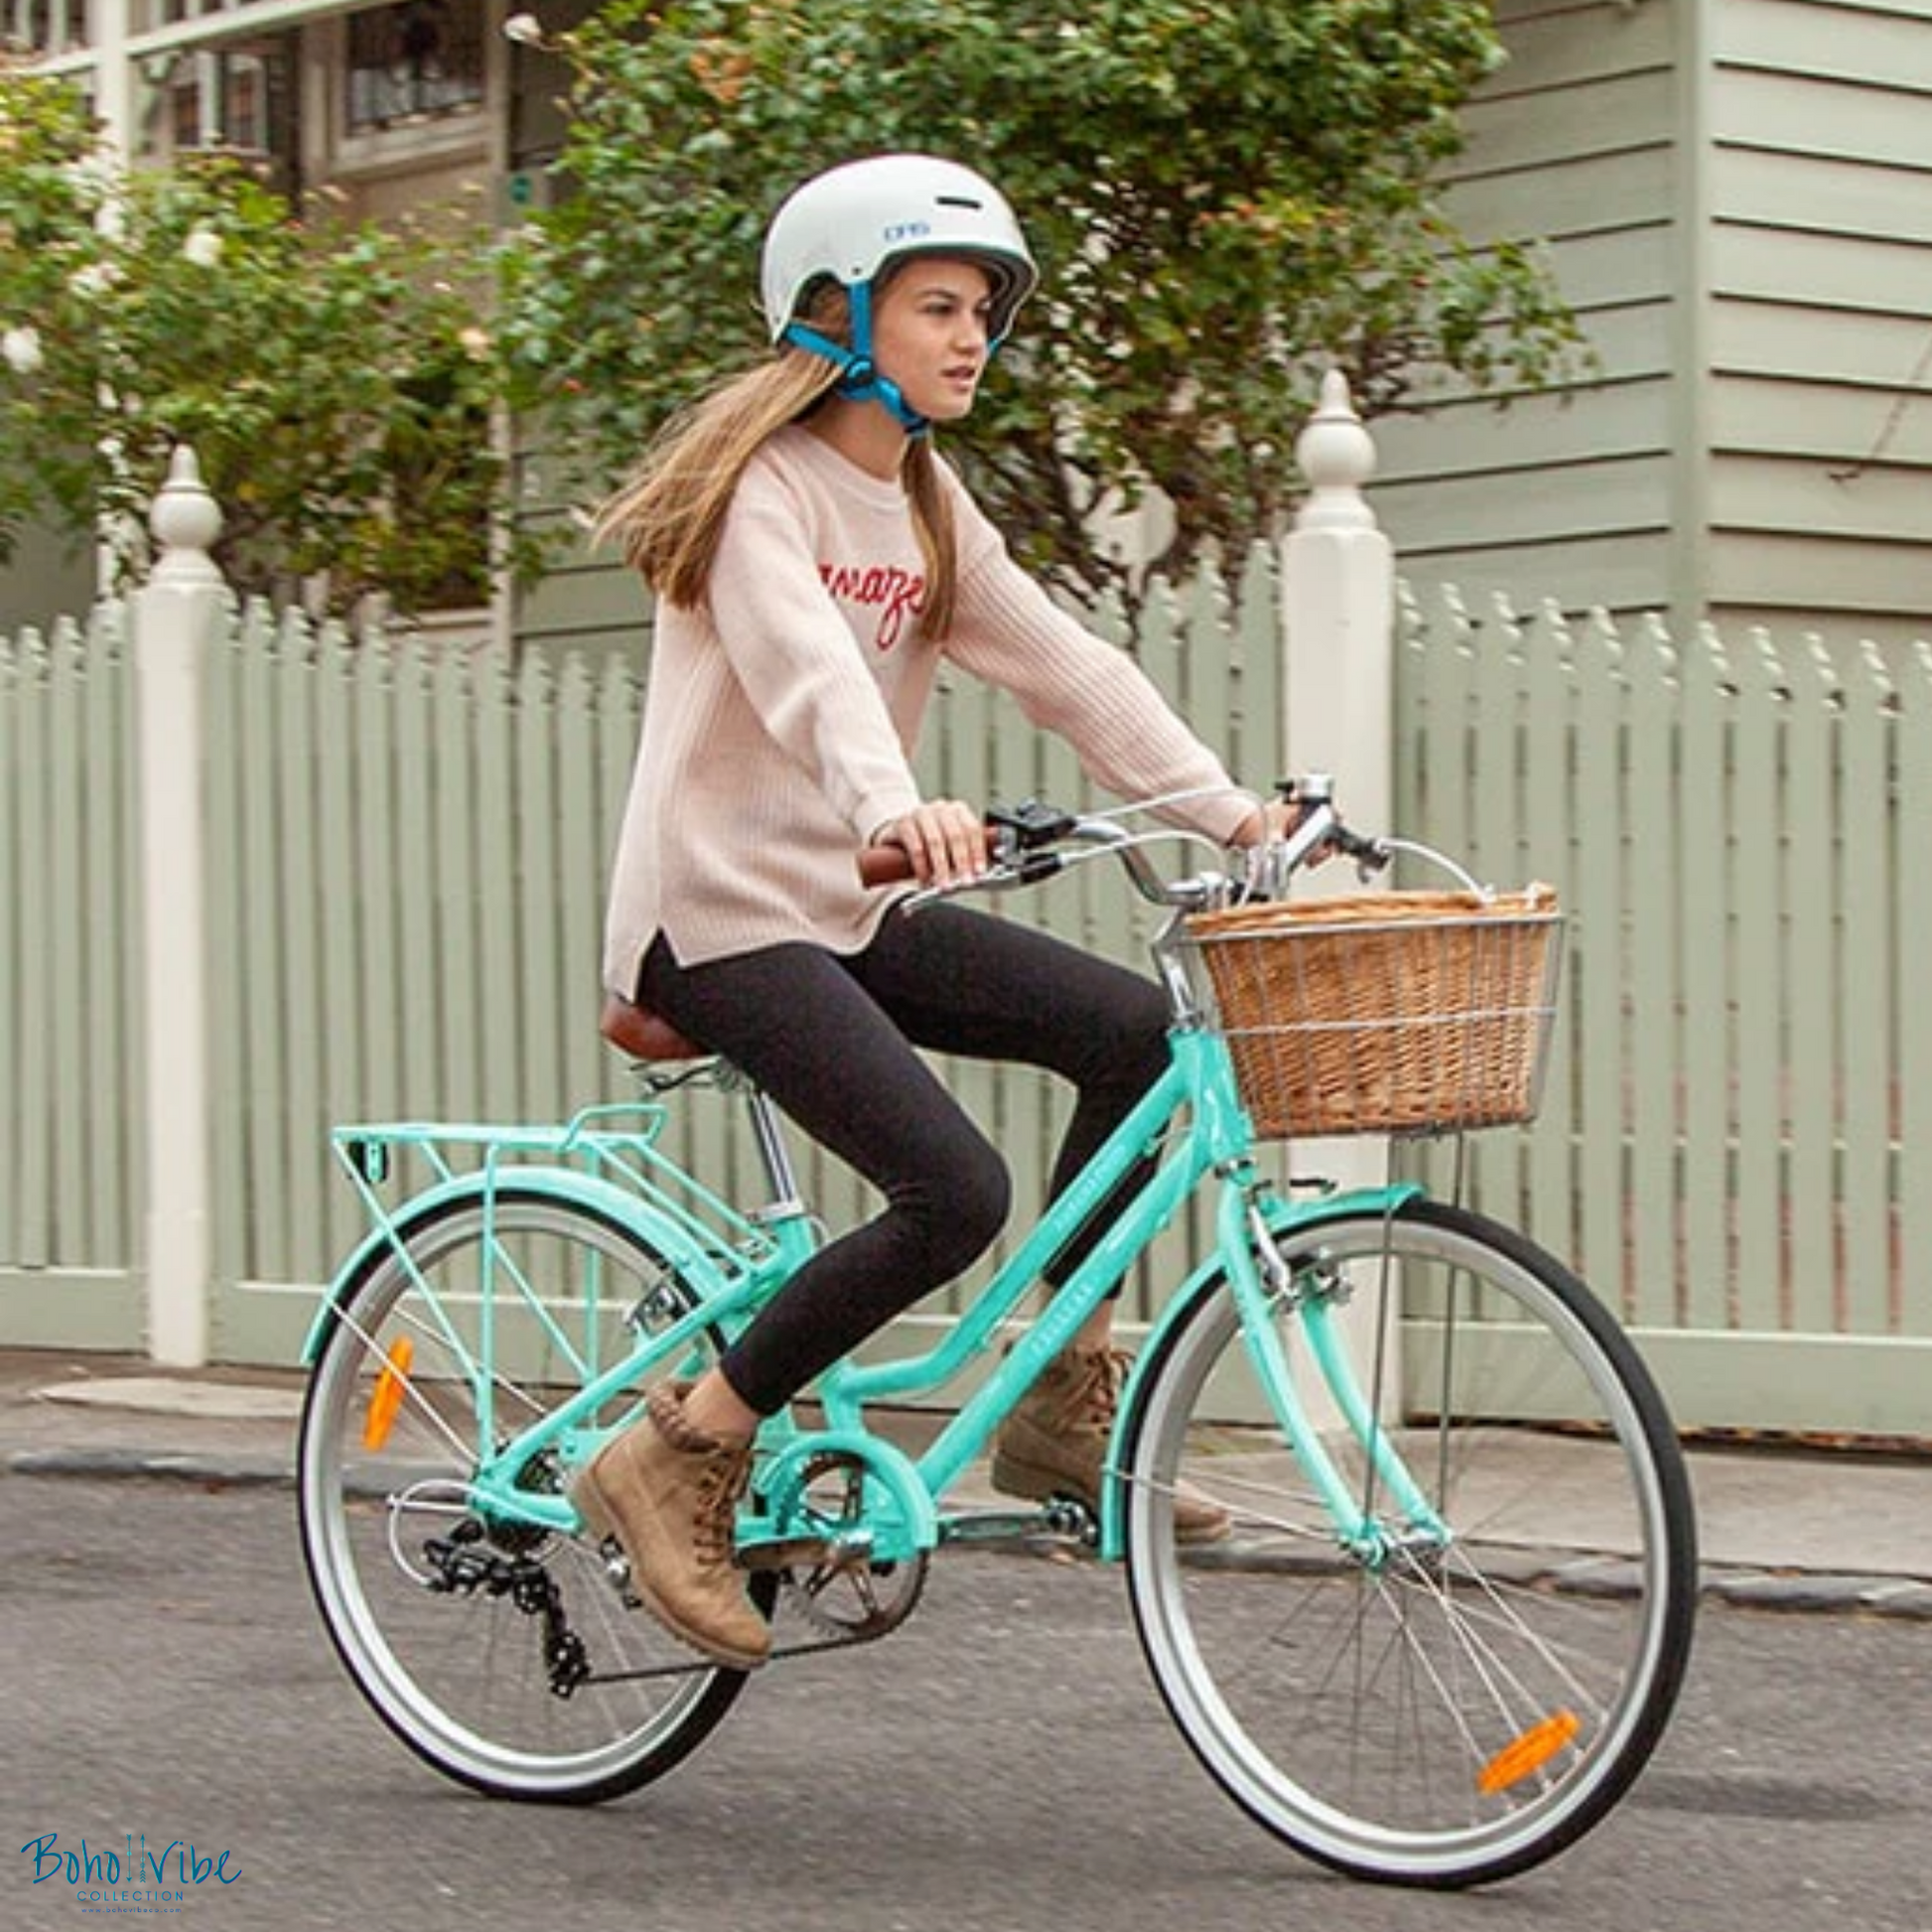 Boho ↡↟ Vibe Collection ↠  Vintage Cruiser Progear Pomona Coastal Commuter Petite Bike Mint Ladies Teen 13" with Basket 